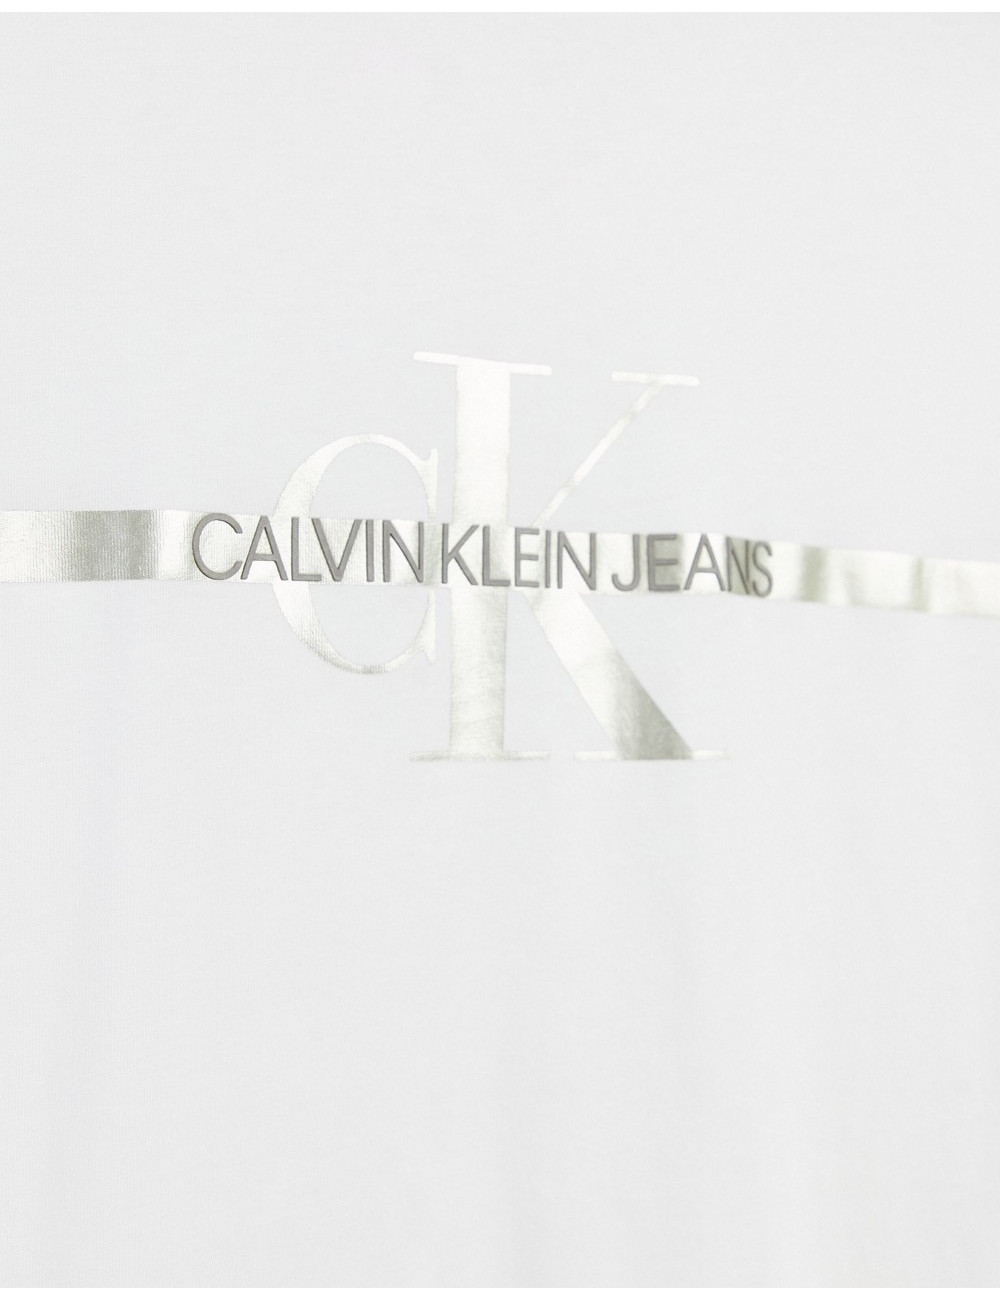 Calvin Klein Jeans gold...